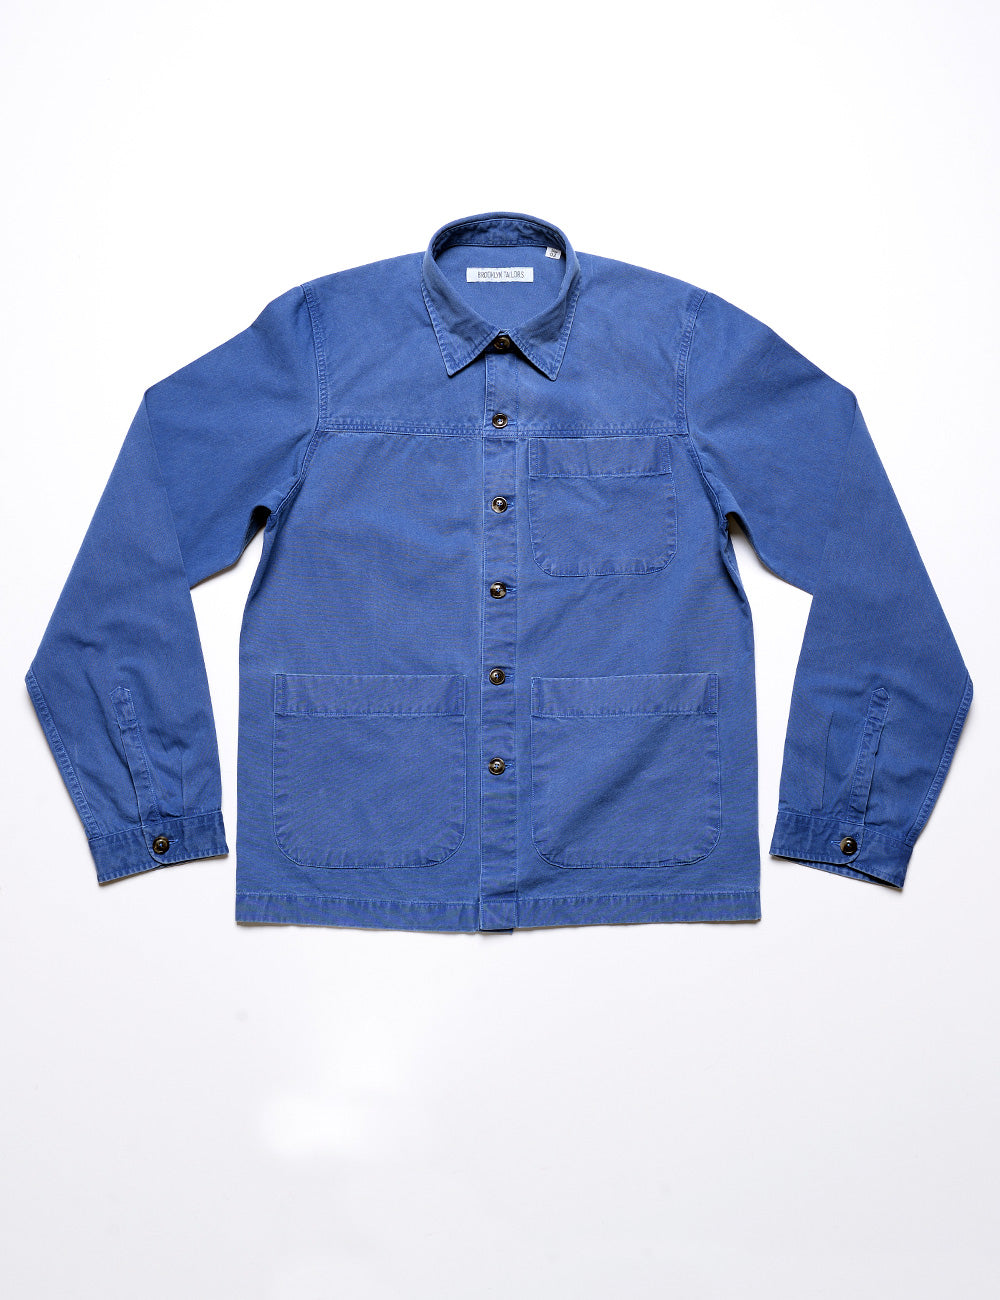 Brooklyn Tailors BKT15 Shirt Jacket in Crisp Cotton - Washed Cobalt full length flat shot